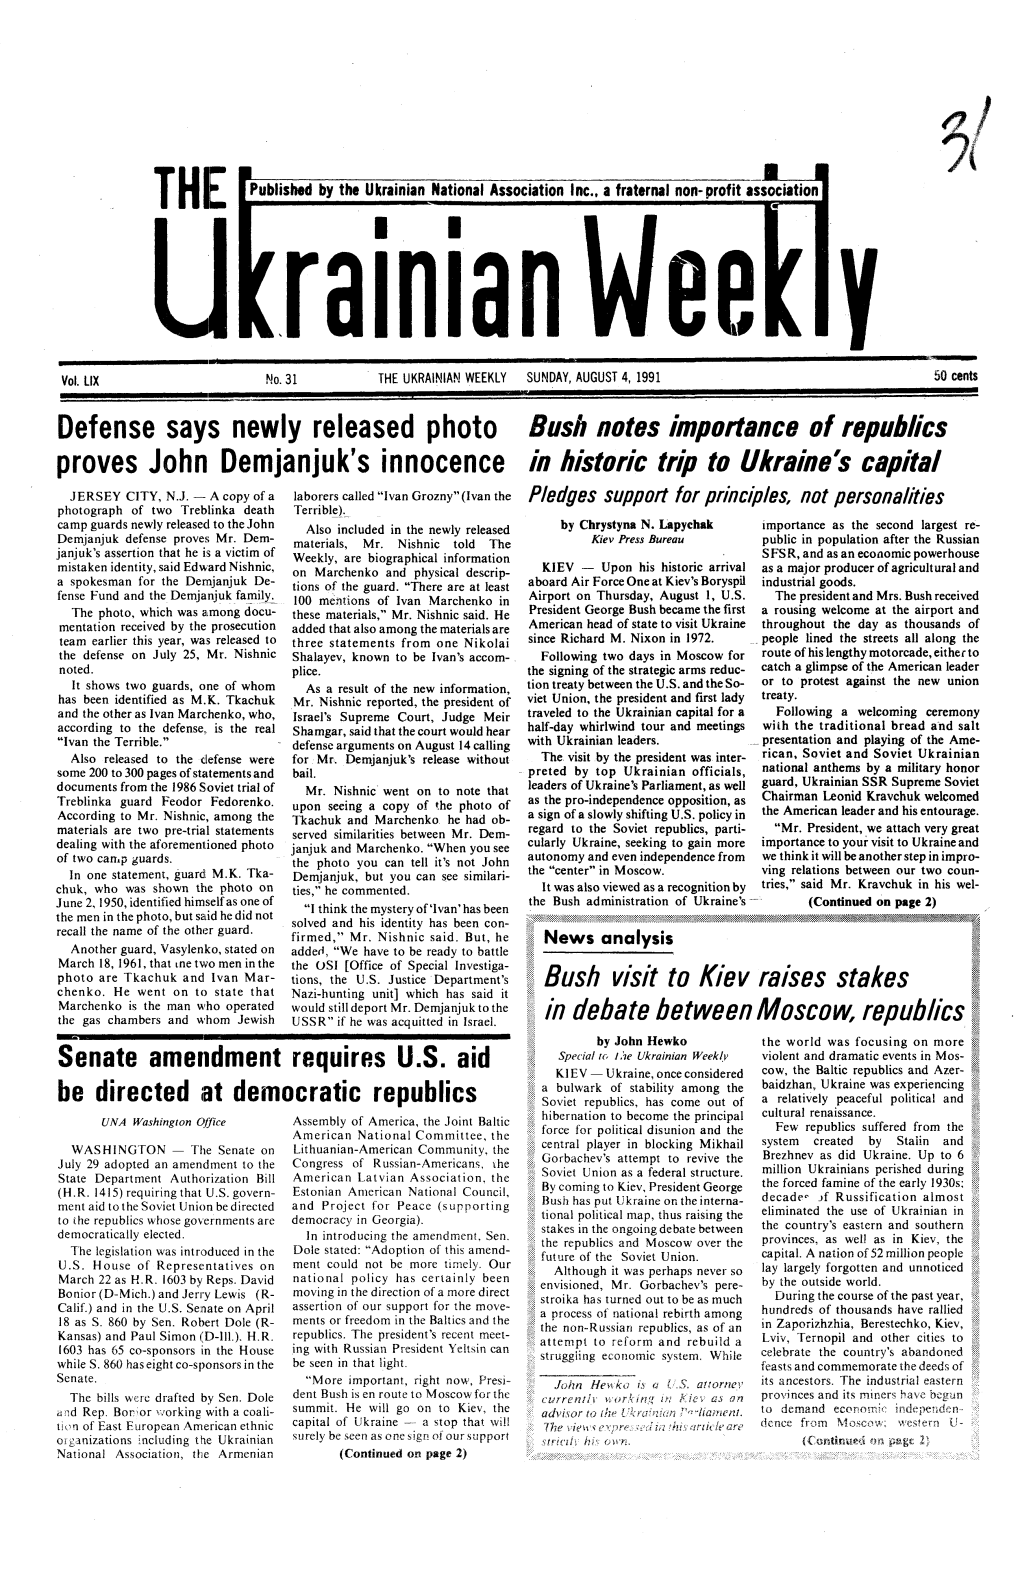 The Ukrainian Weekly 1991, No.31